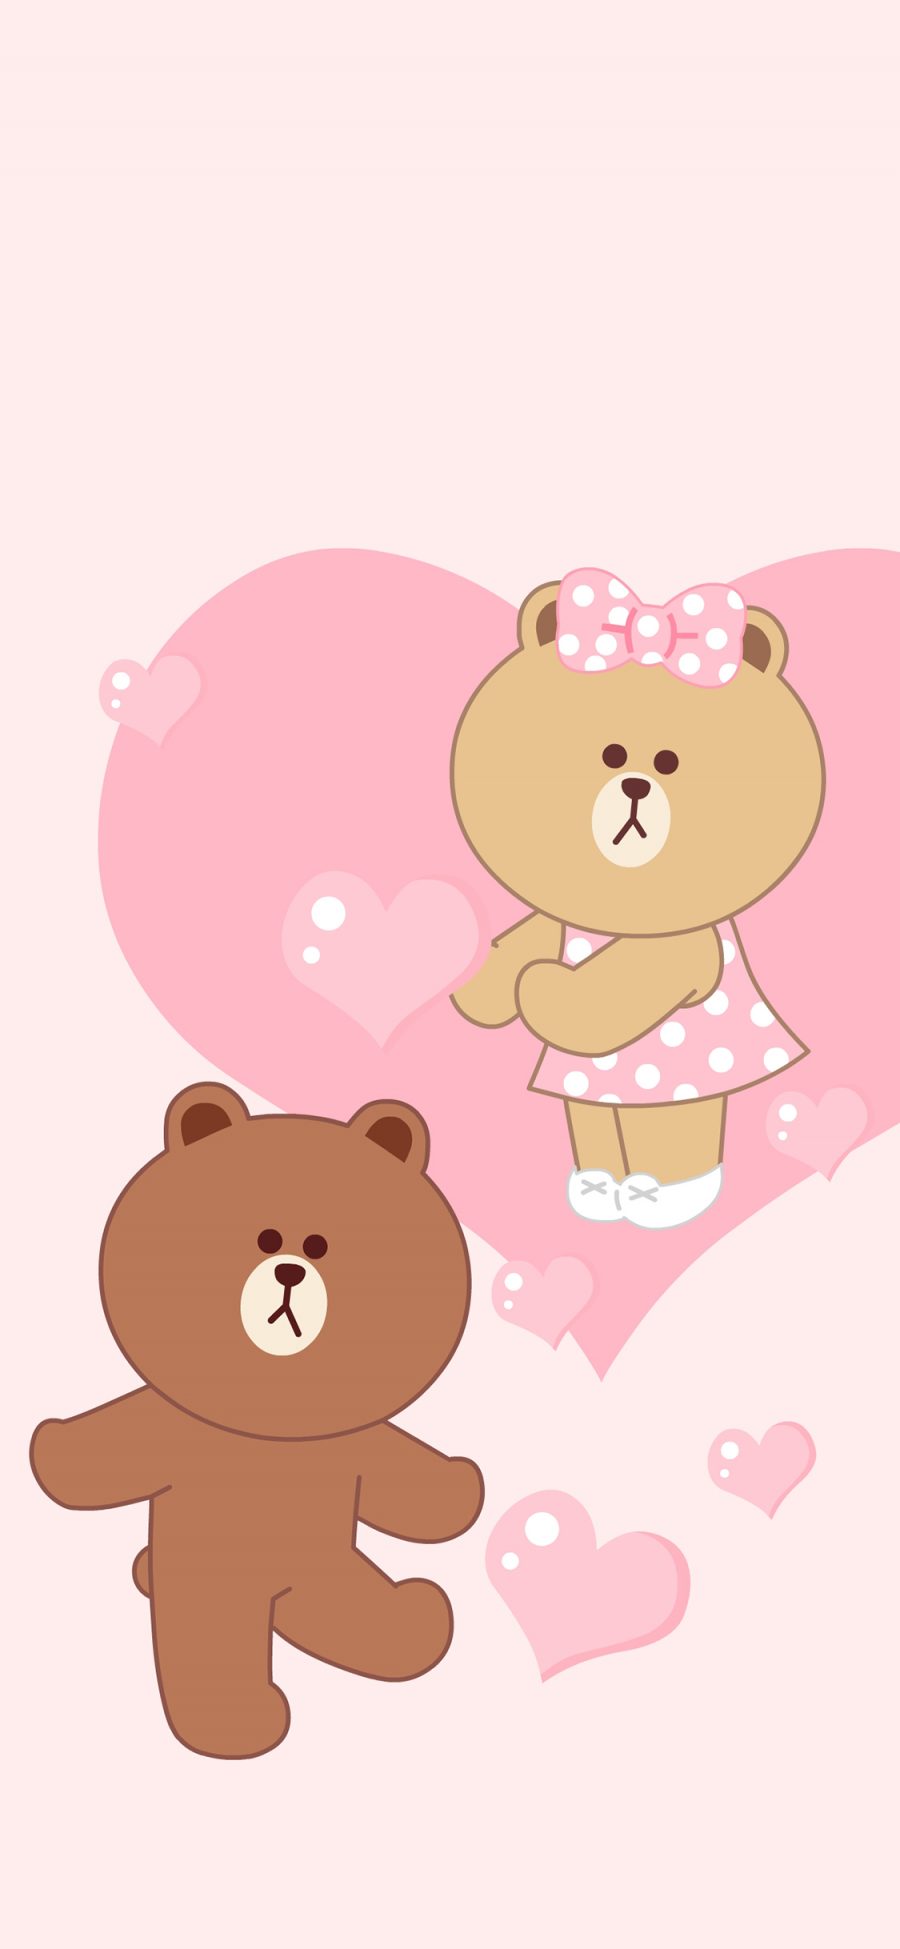 [2436×1125]line friends 布朗熊 动画 爱心 粉色 爱情 苹果手机动漫壁纸图片